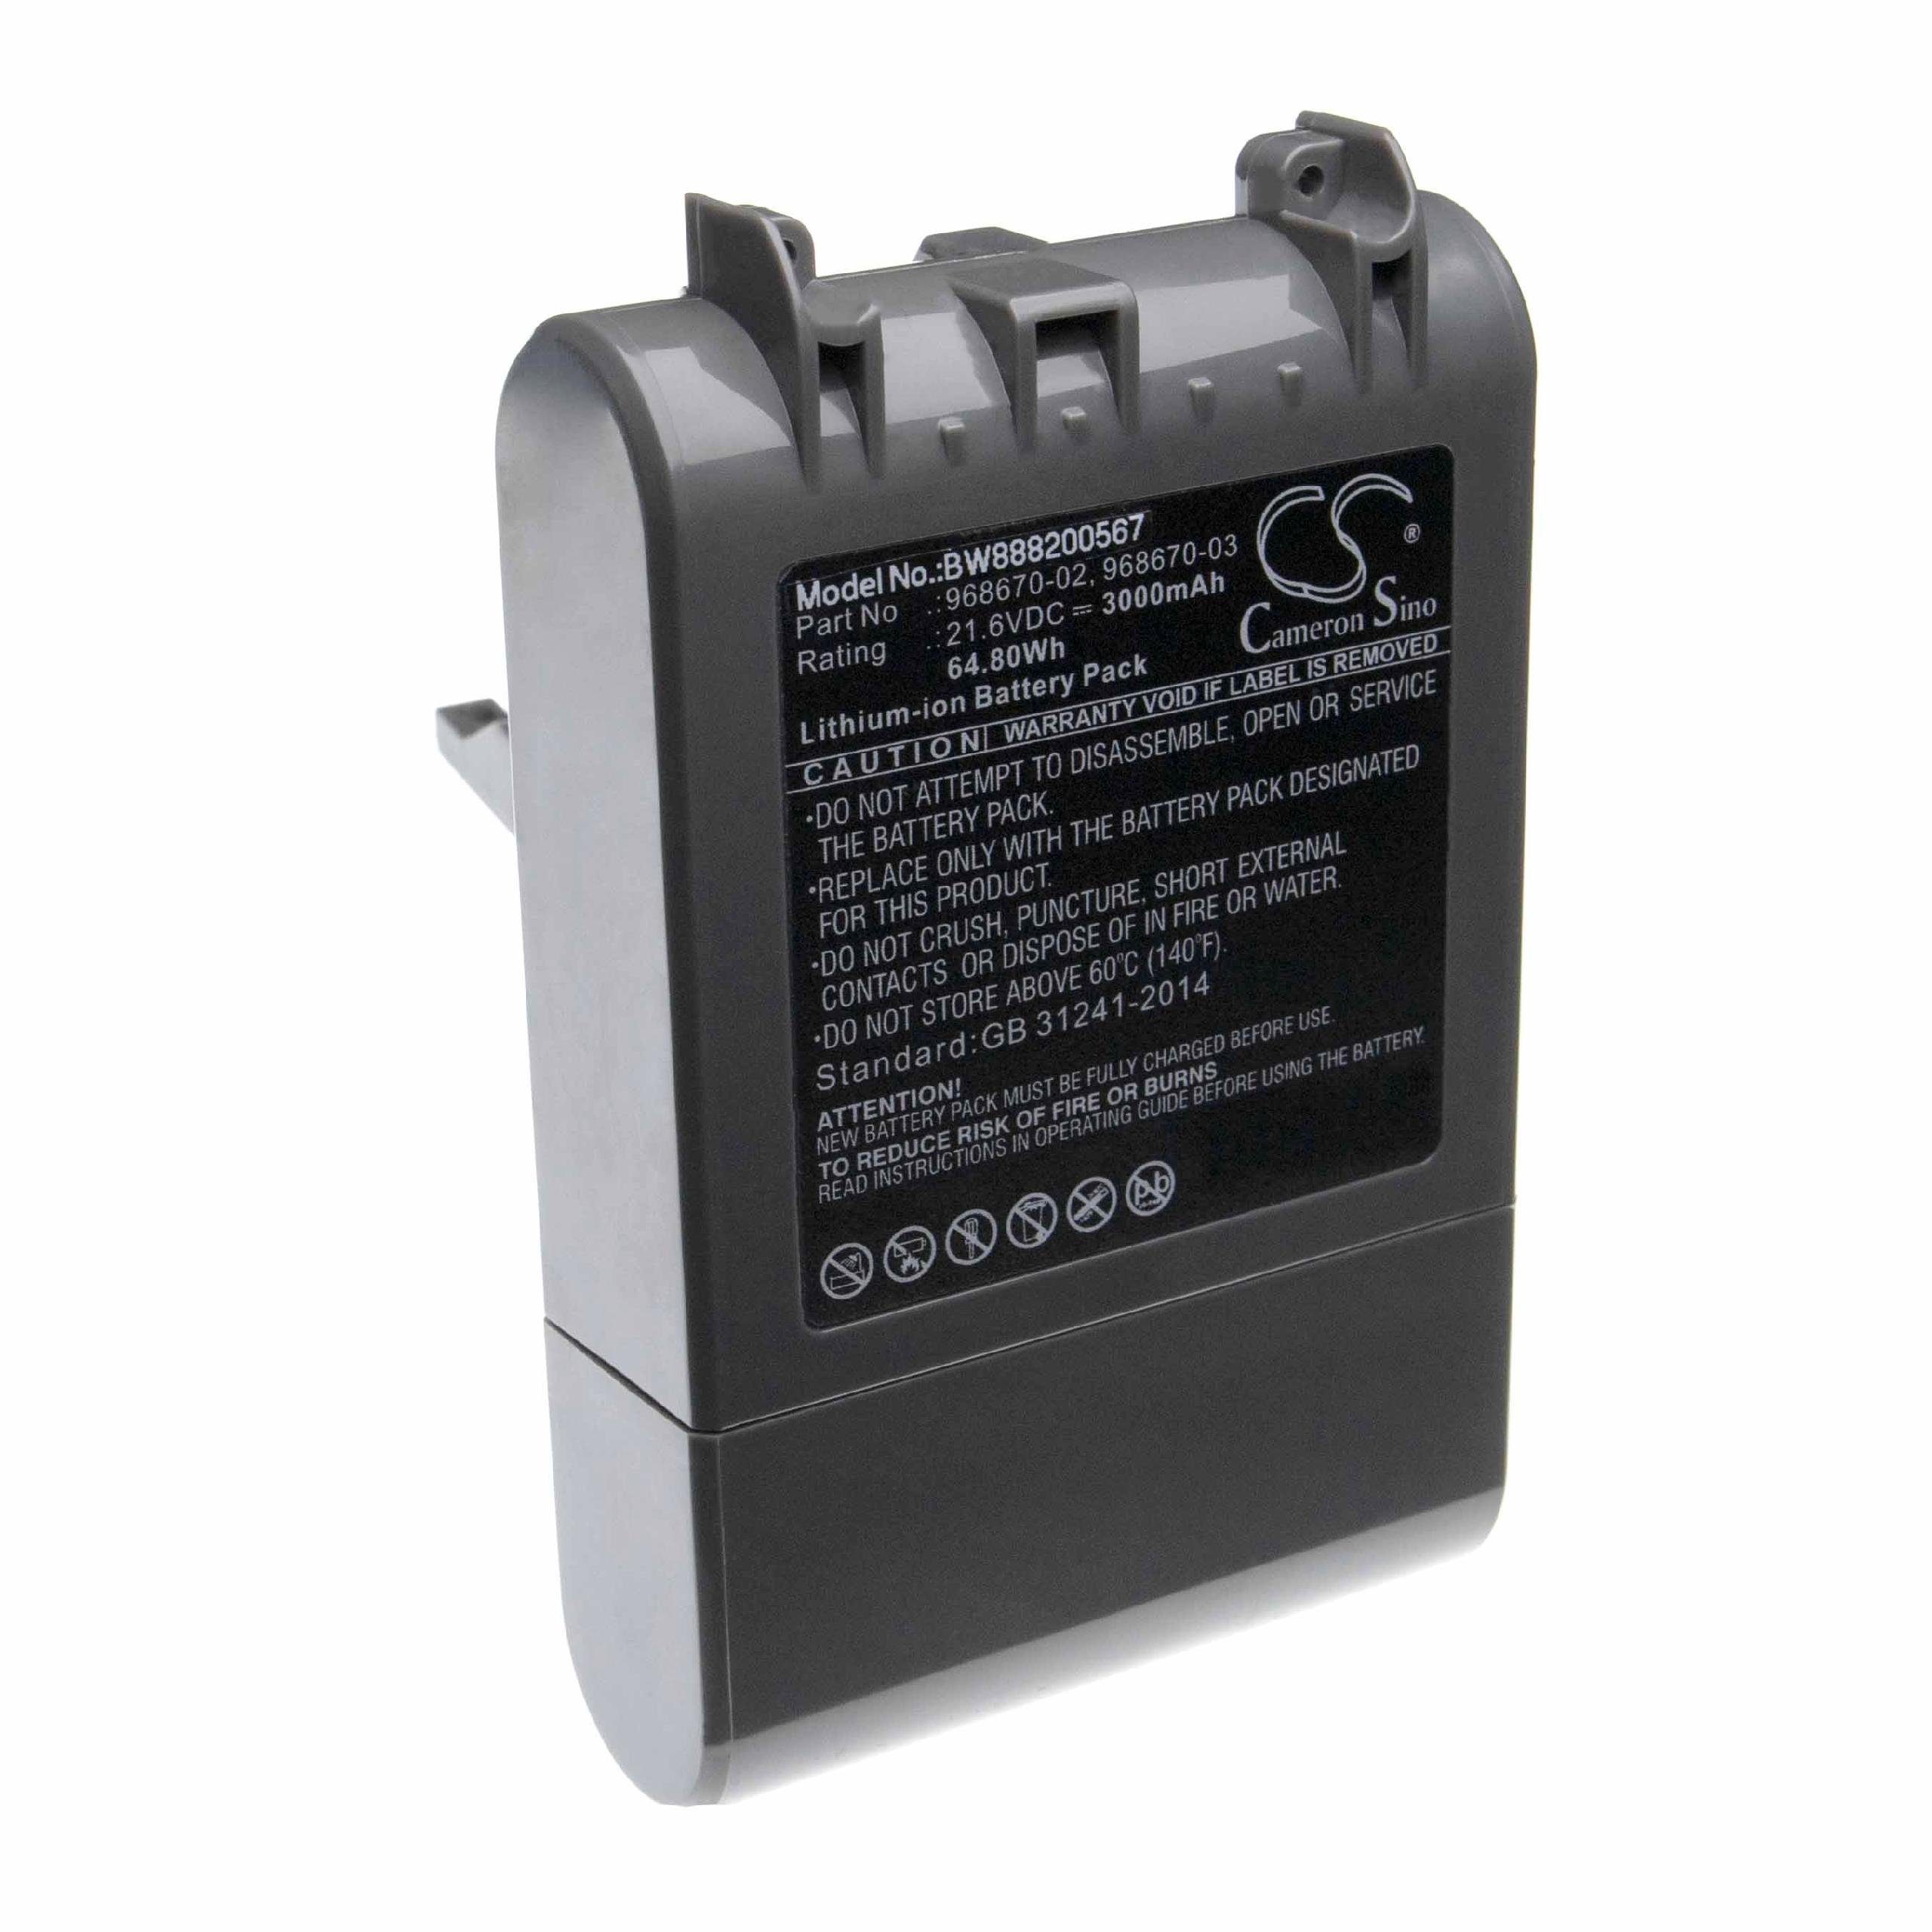 Akumulator do odkurzacza zamiennik Dyson 968670-03, 968670-02 - 3000 mAh 21,6 V Li-Ion, szary